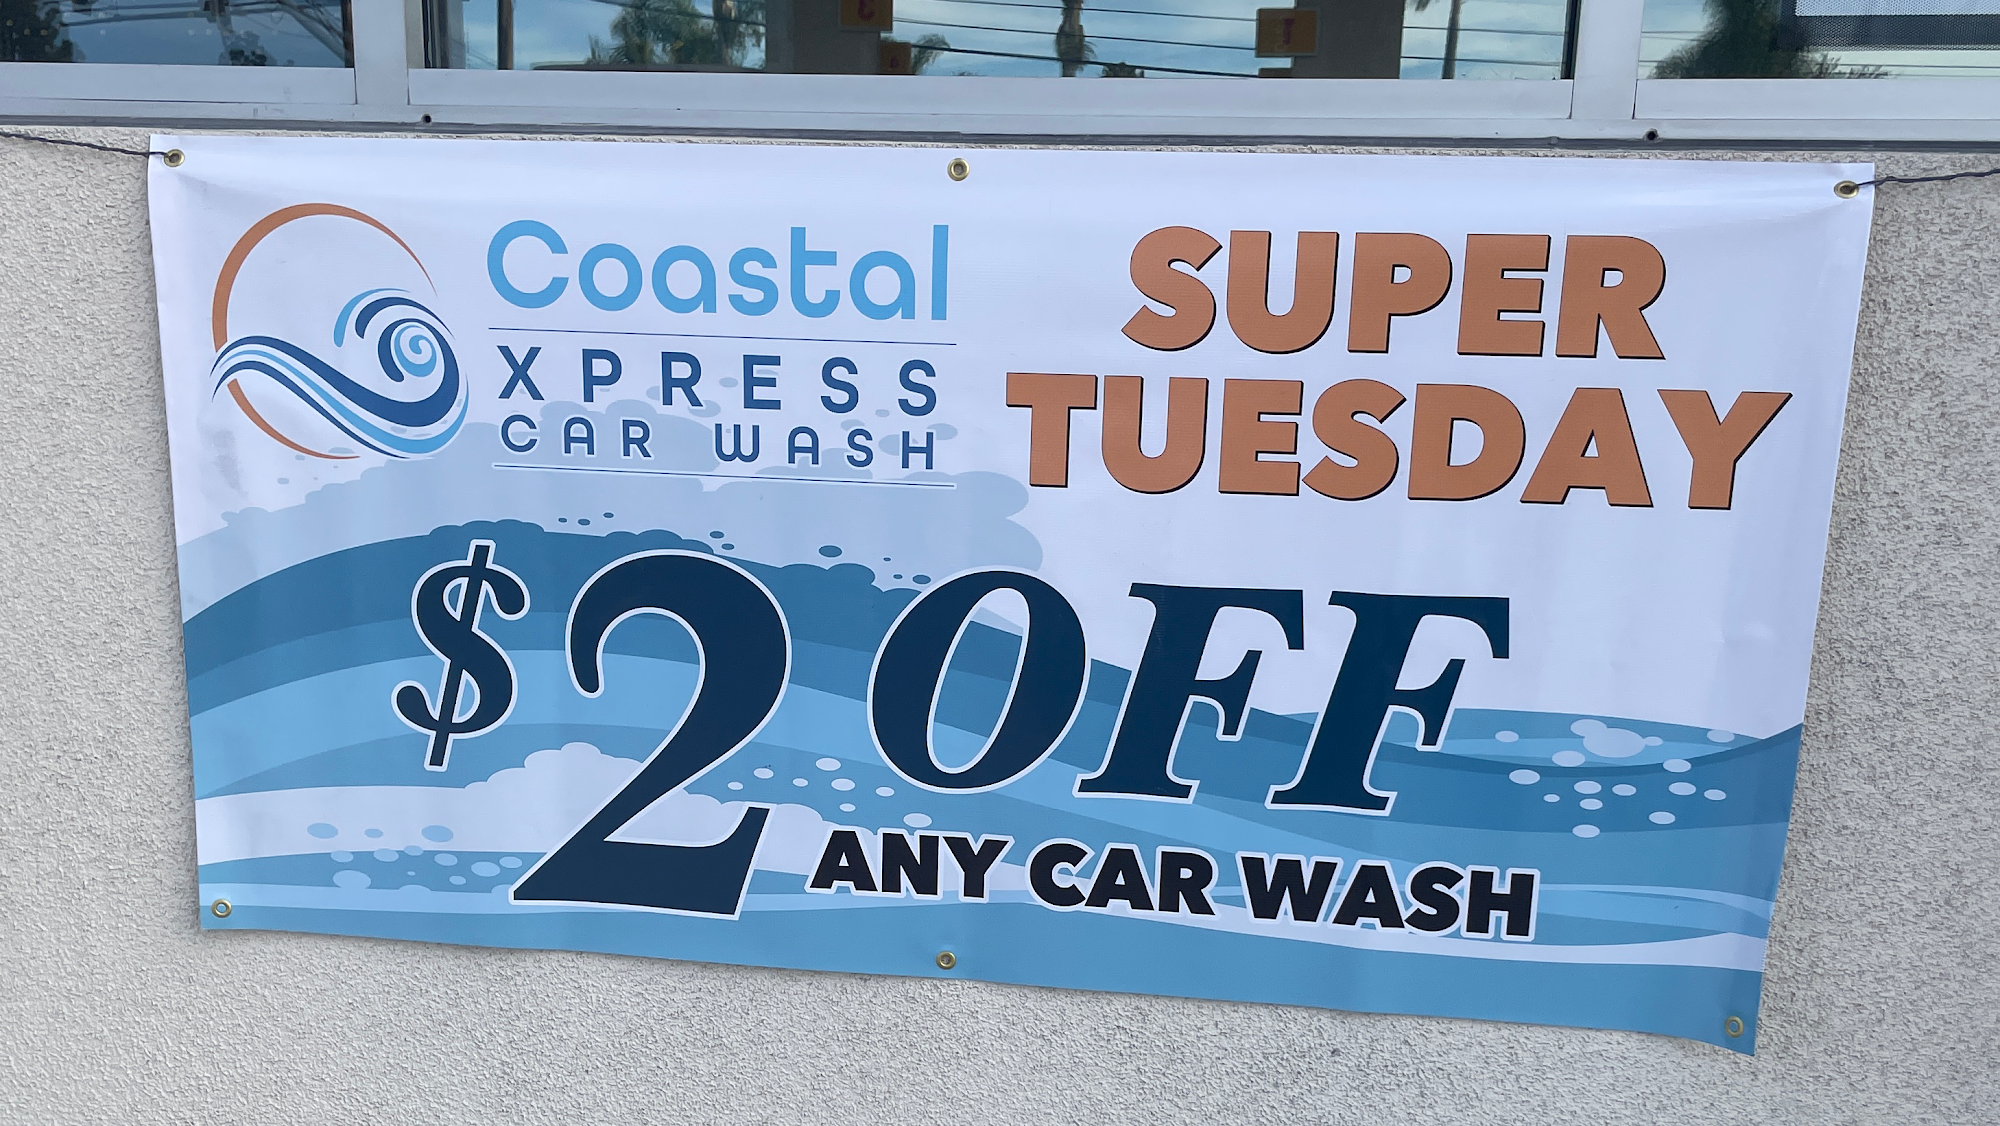 Coastal Xpress Car Wash